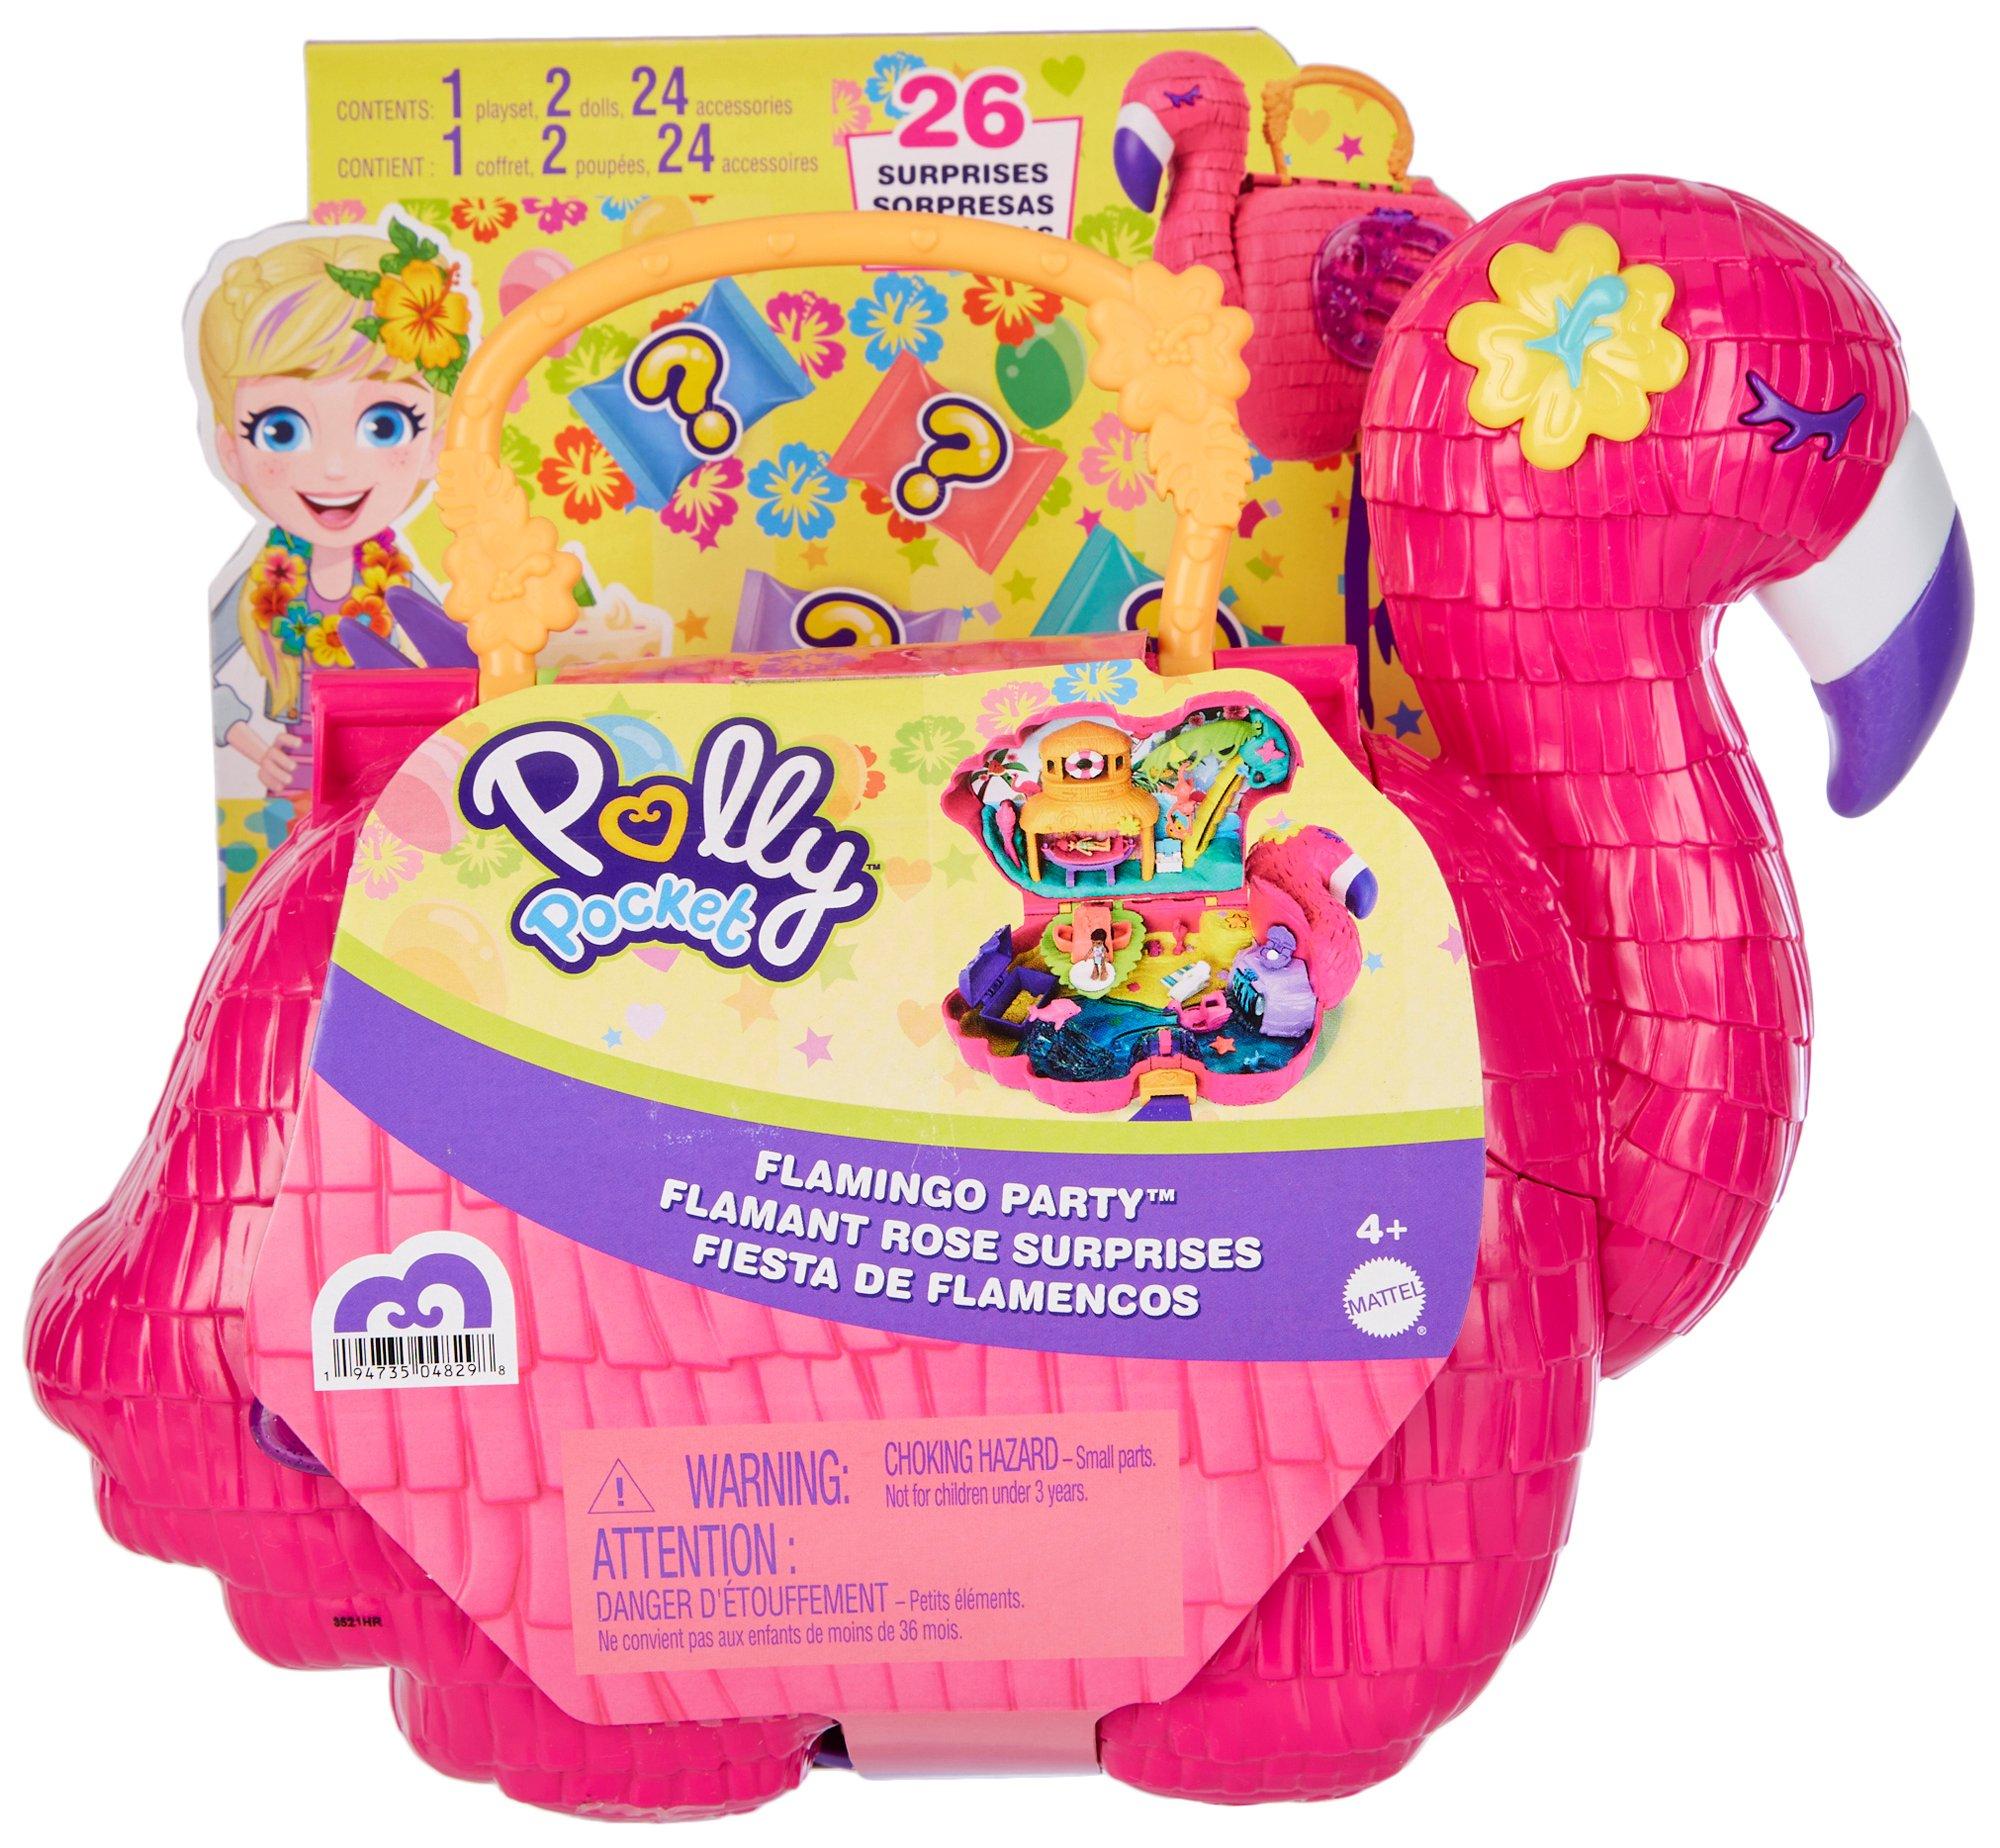 Polly Pocket Mini Toys Compact Playset